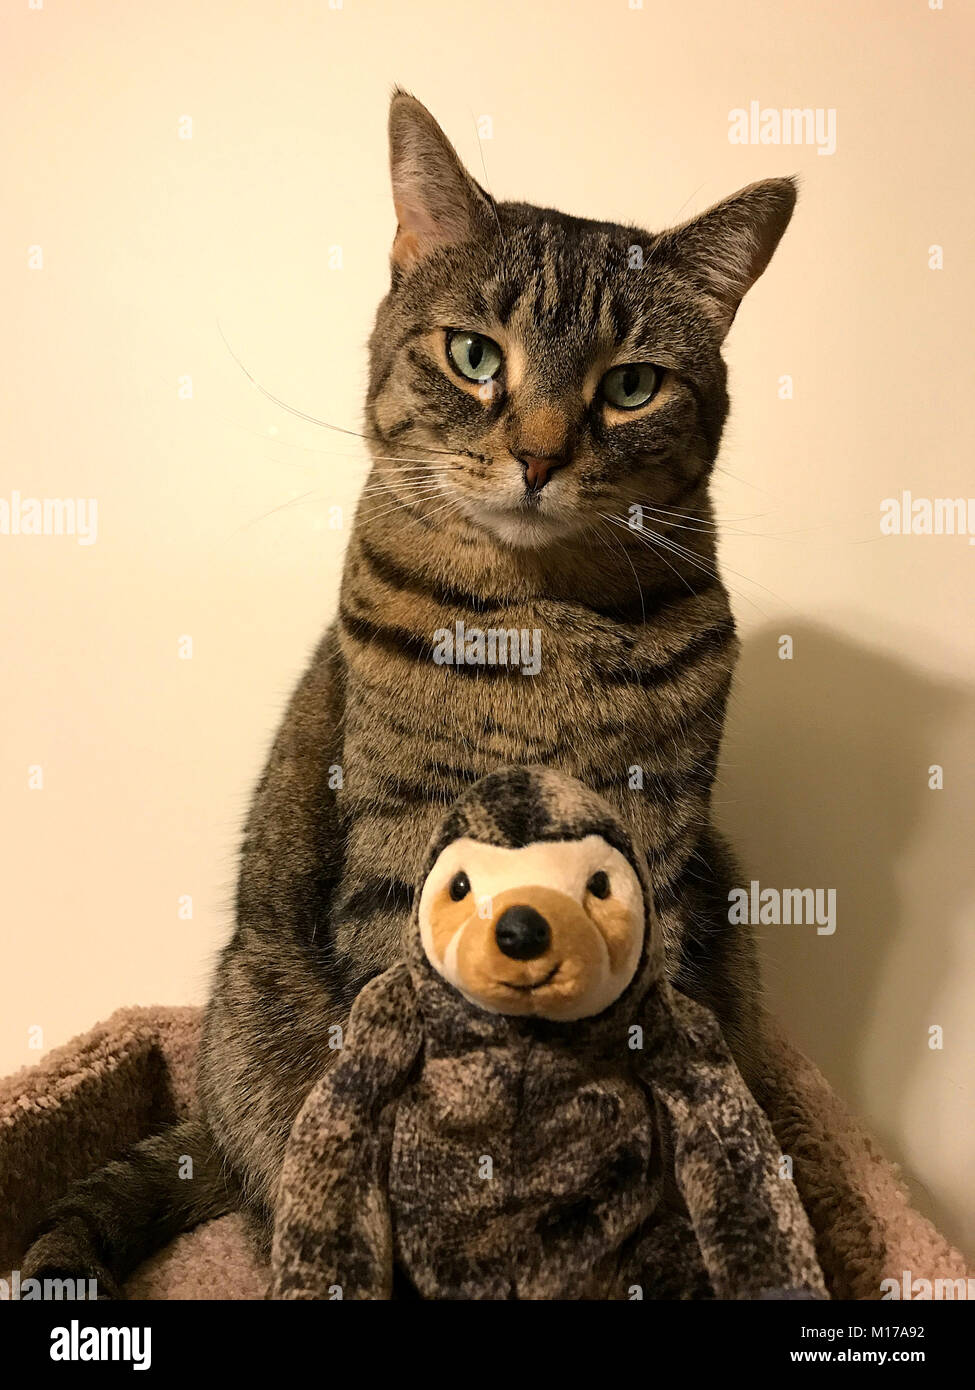 Tabby cat and her plush stuffed sloth posing Stock Photo - Alamy